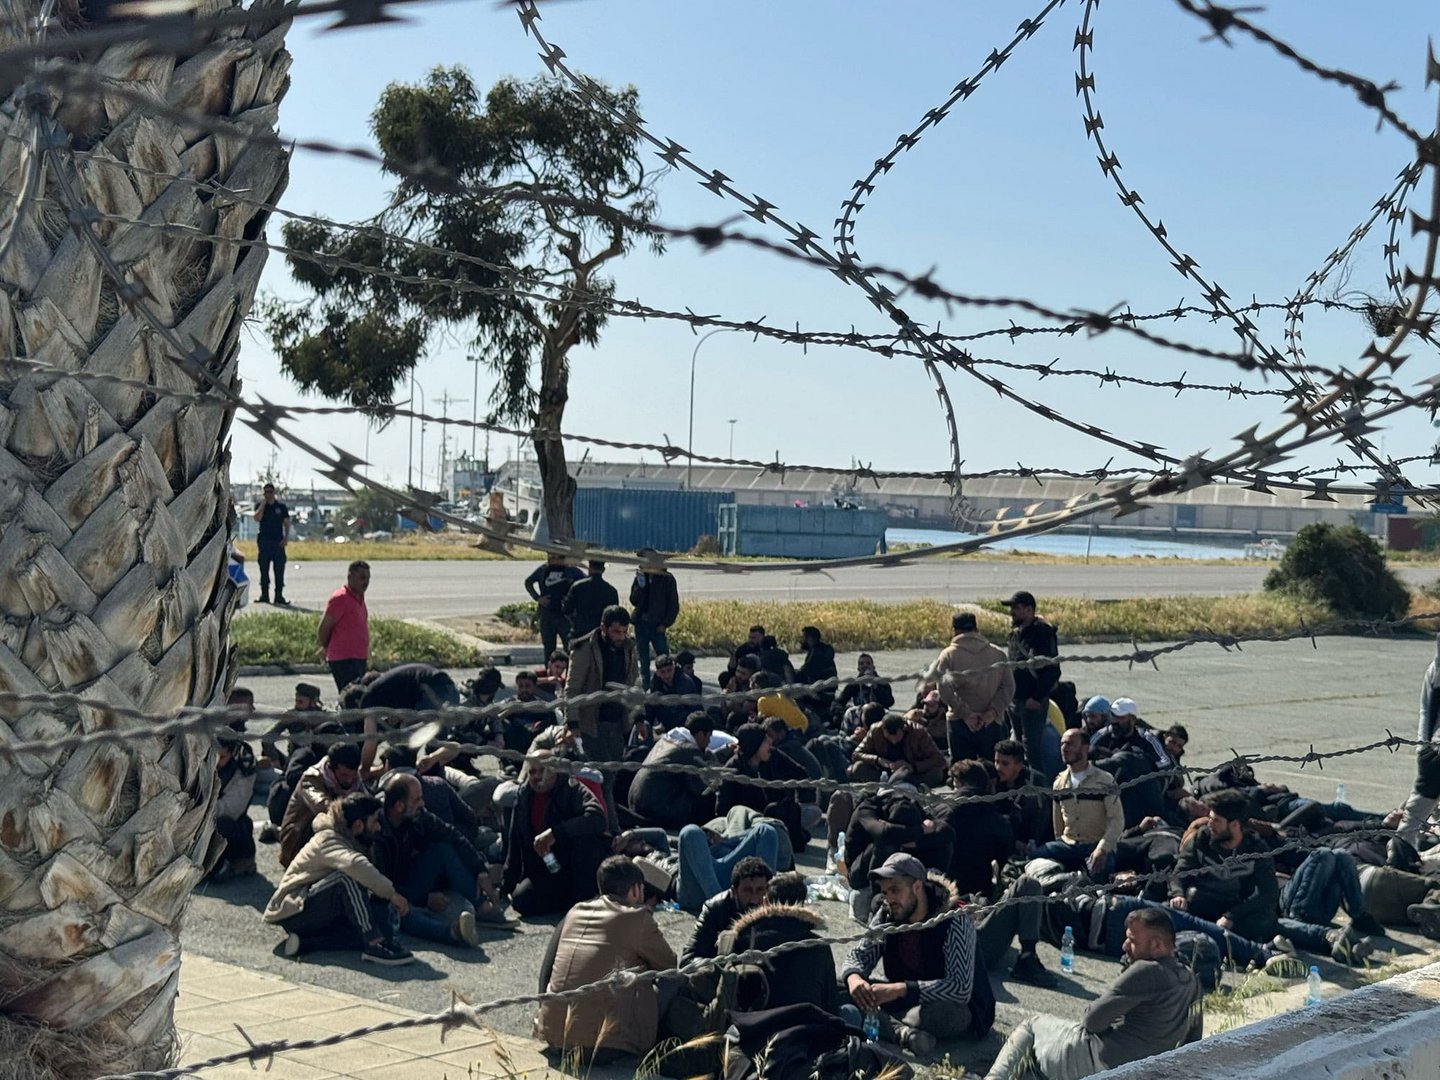 Cyprus has repatriated 4,491 migrants so far this year